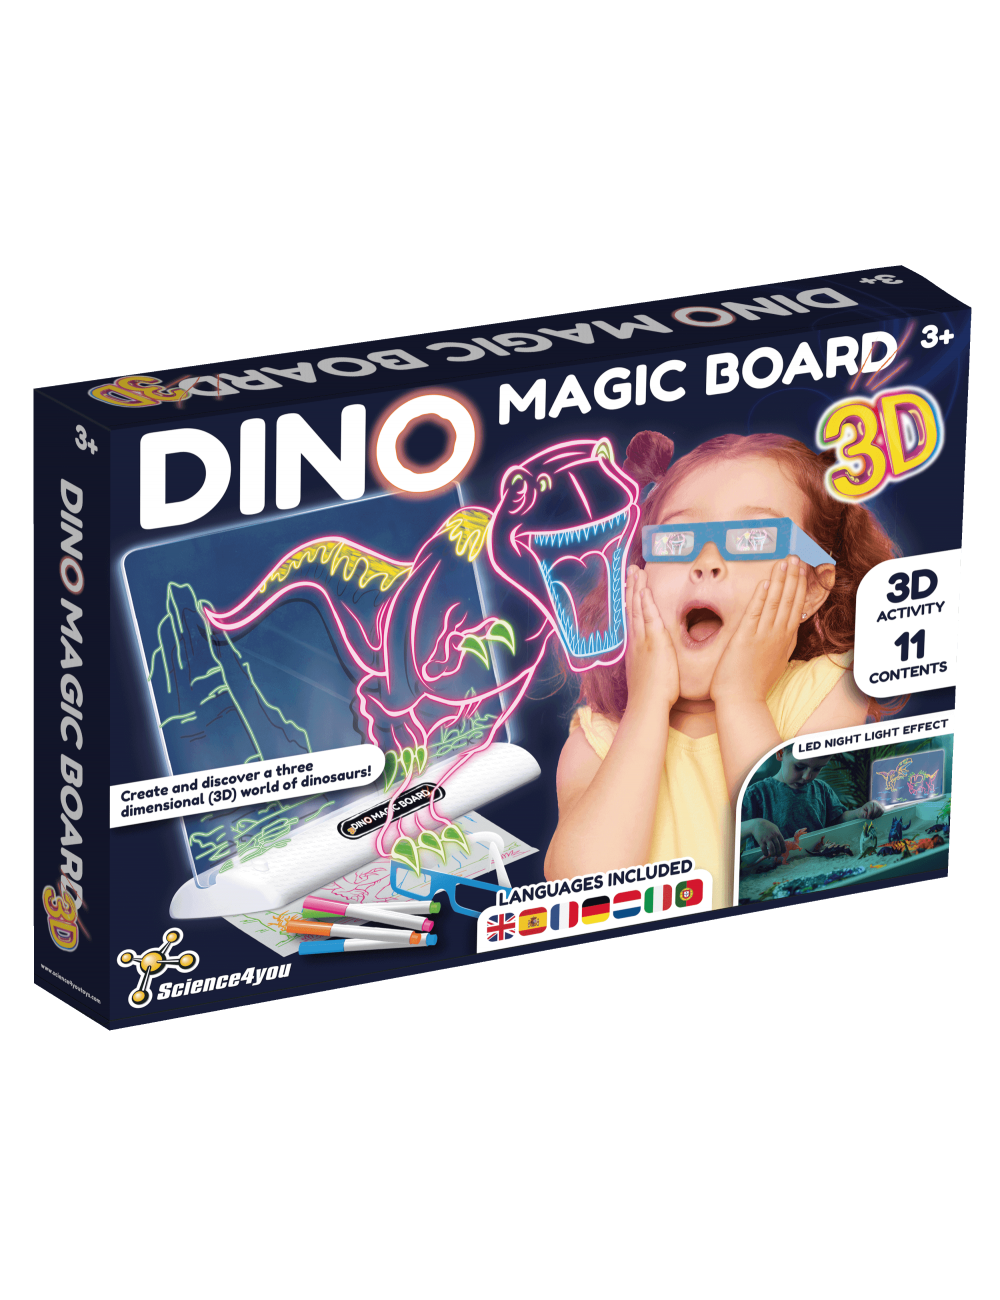 Magic board